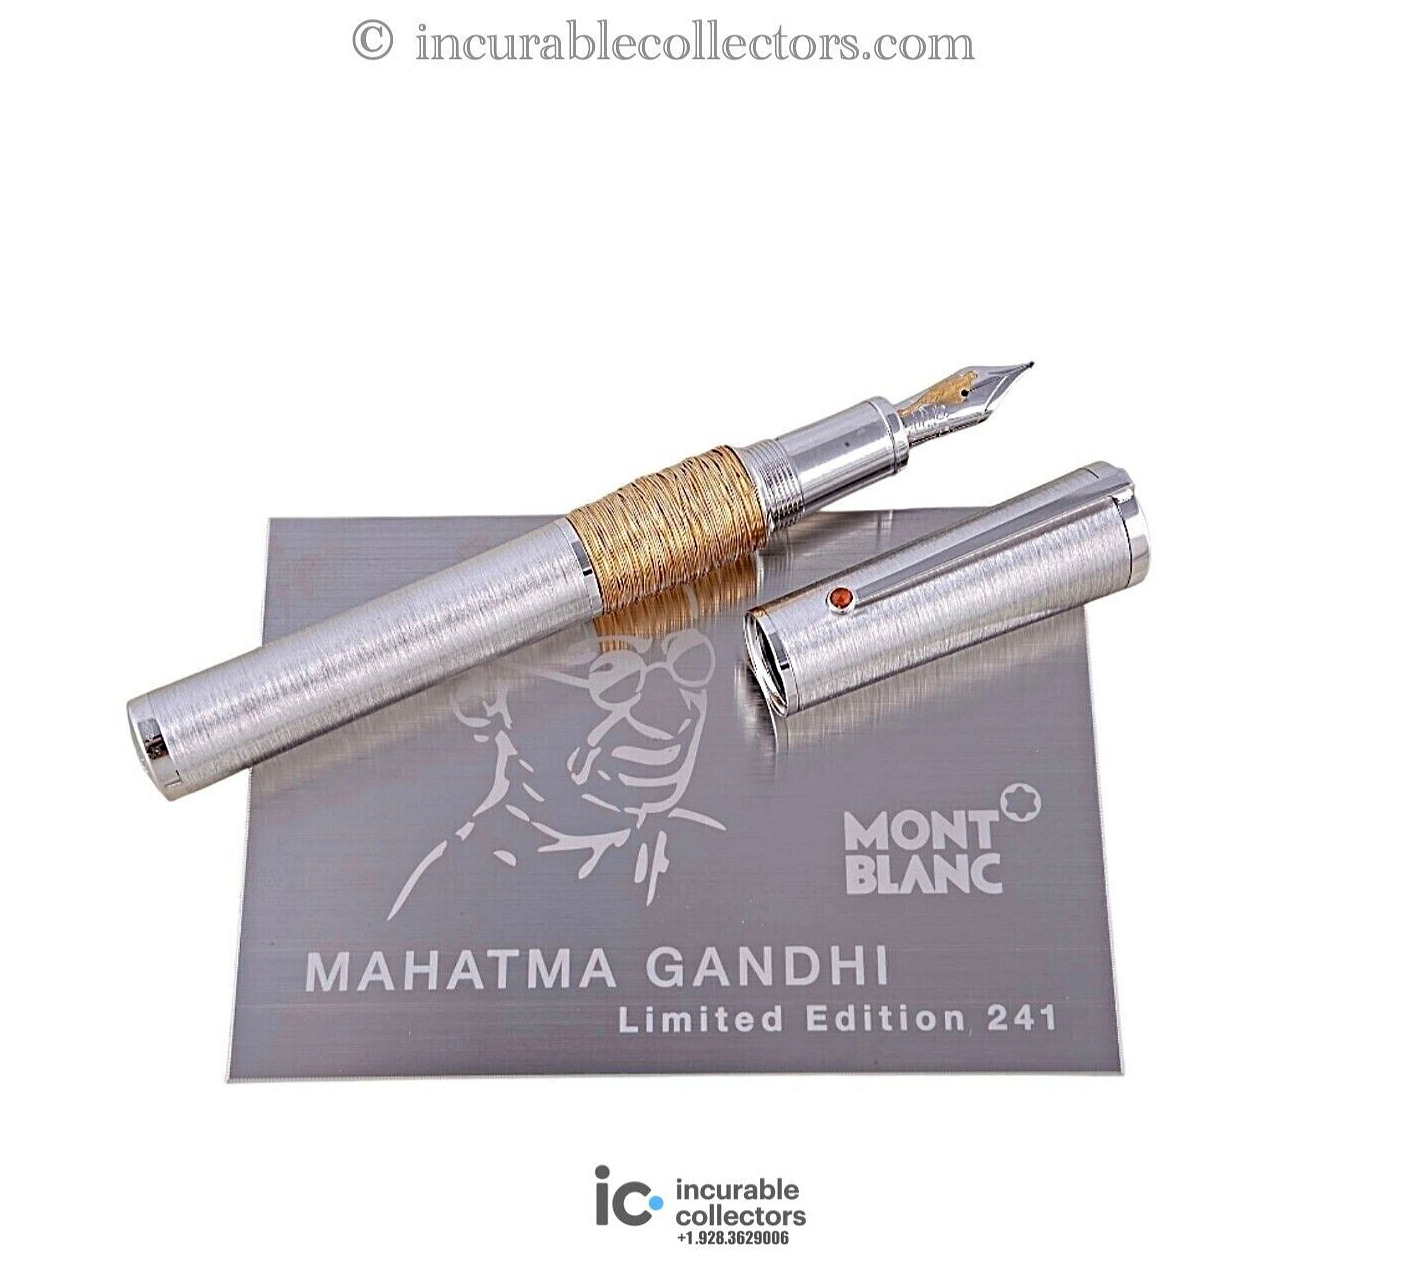 RARE MONTBLANC MAHATMA GANDHI GREAT CHARACTERS LE 241 FOUNTAIN PEN 18K GOLD